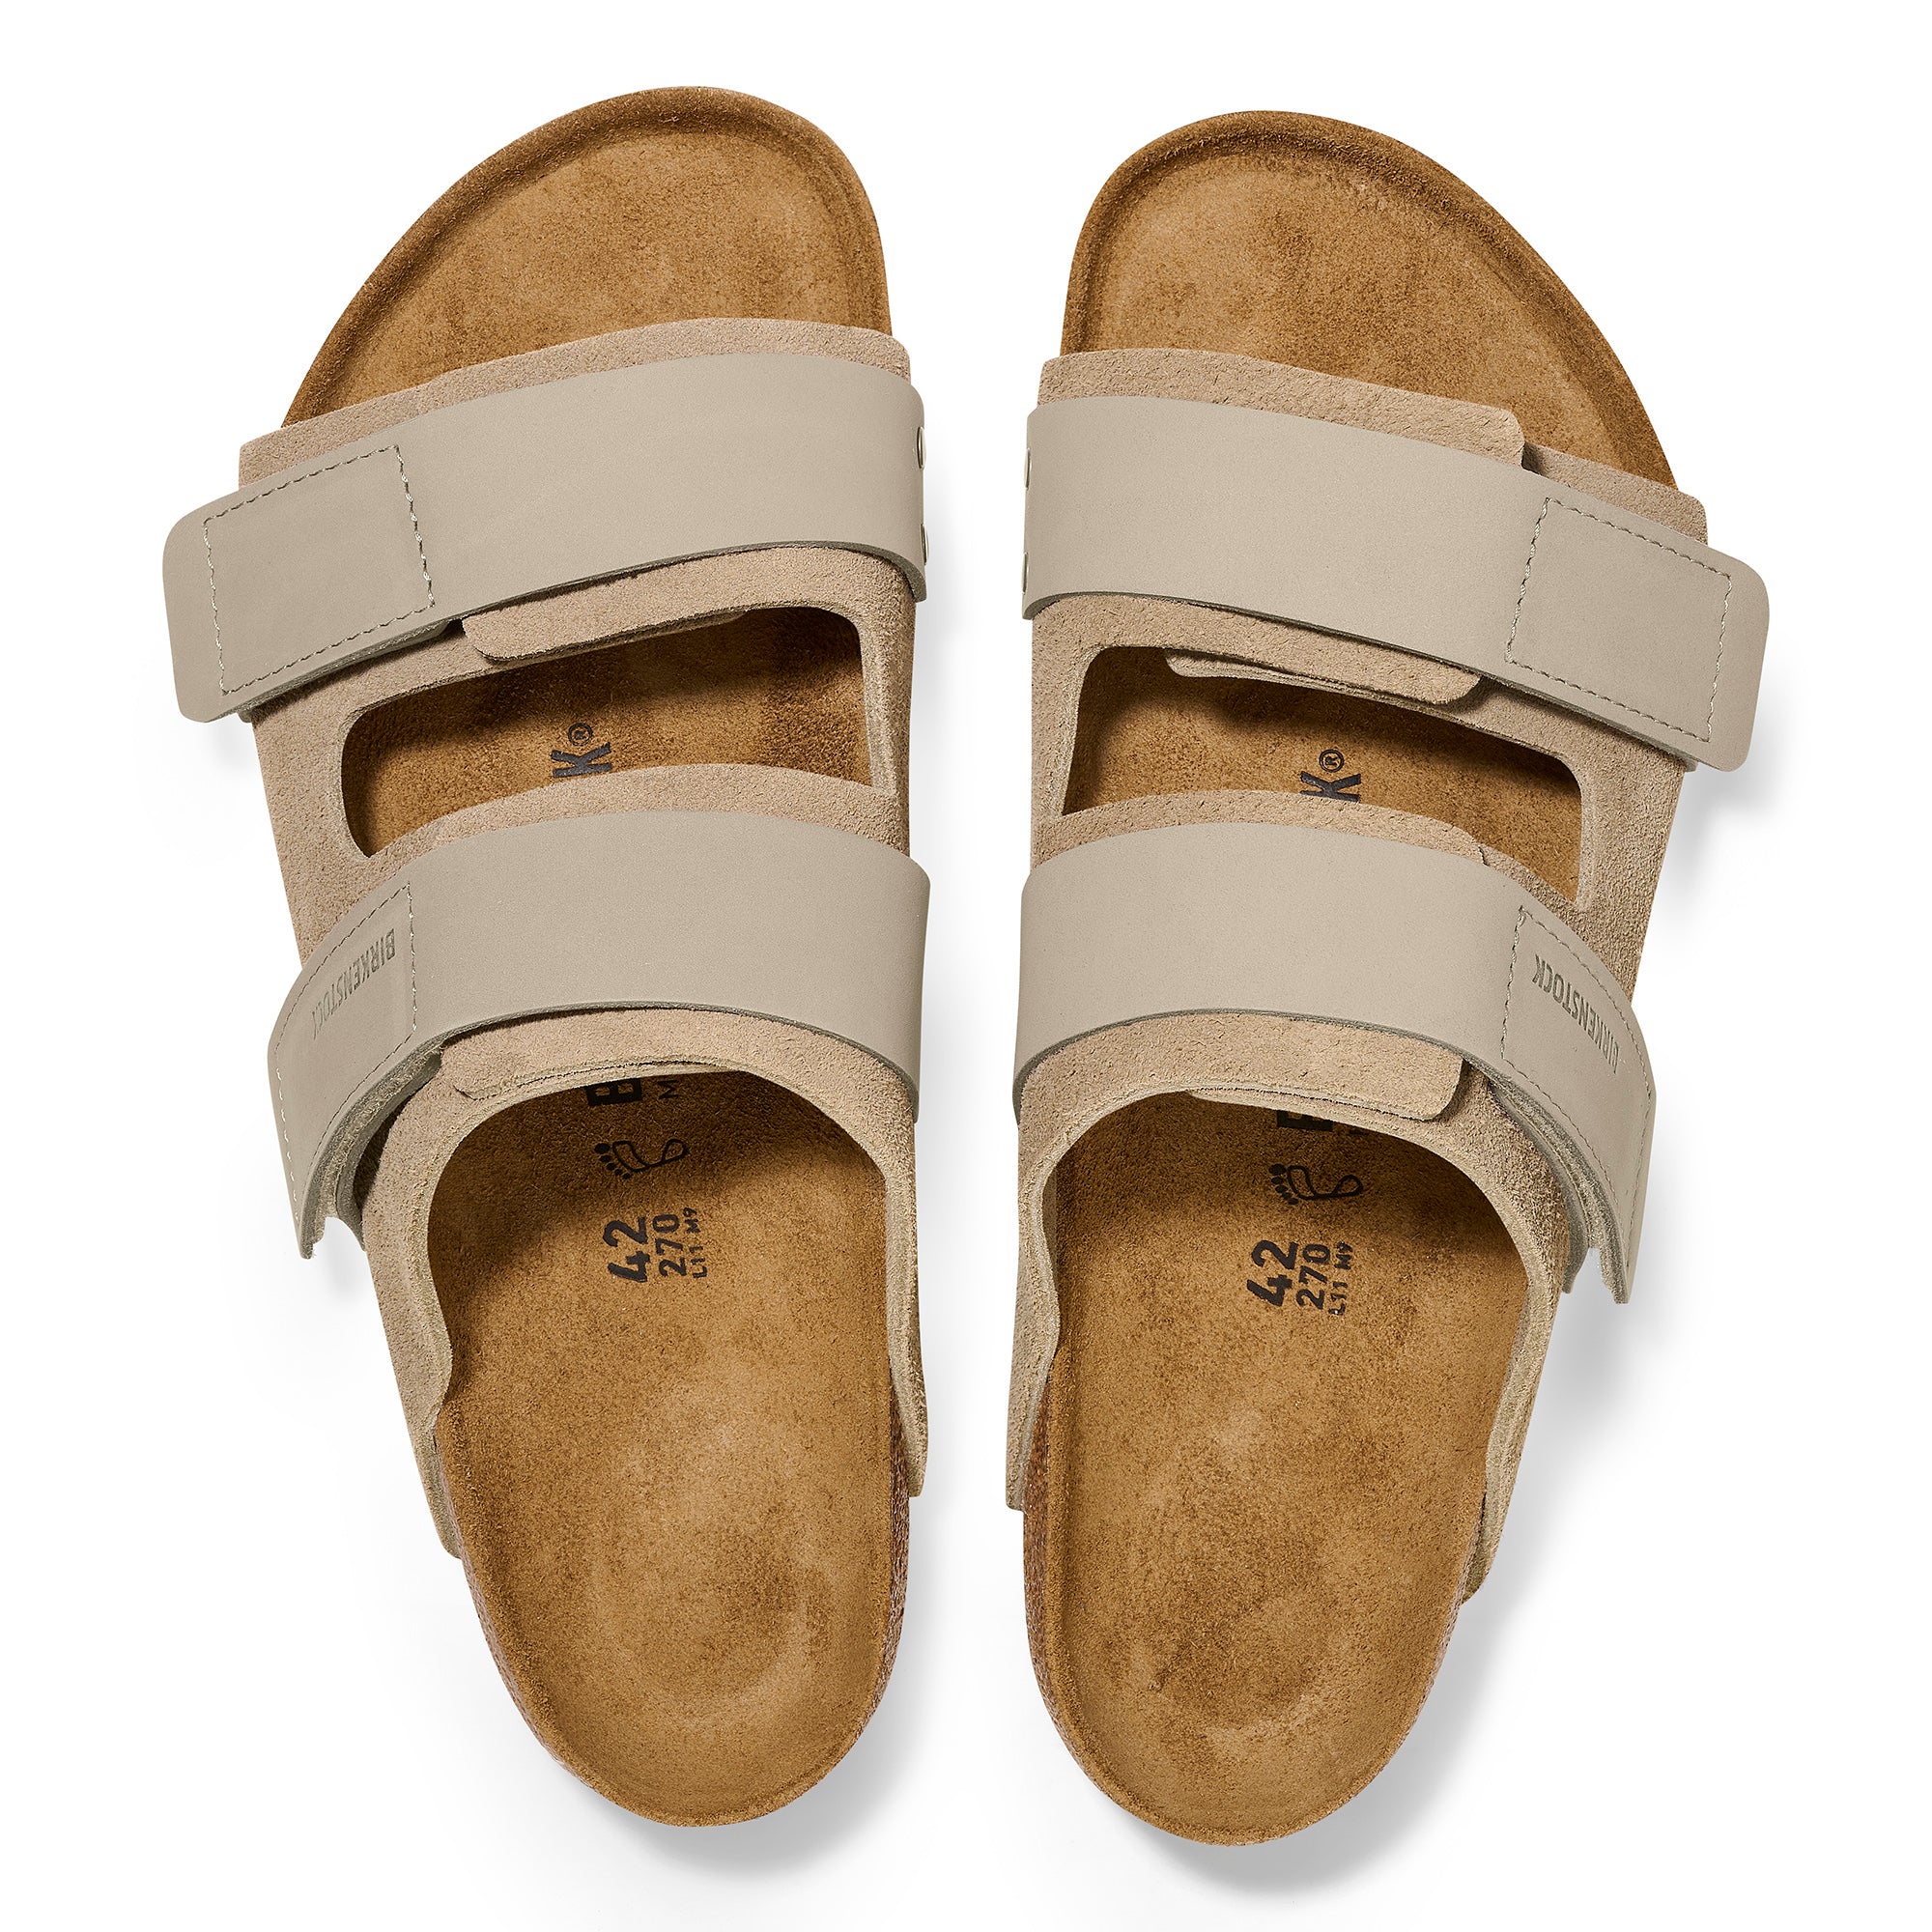 Birkenstock Uji Narrow Slide Sandal (Women) - Taupe Suede Sandals - Slide - The Heel Shoe Fitters